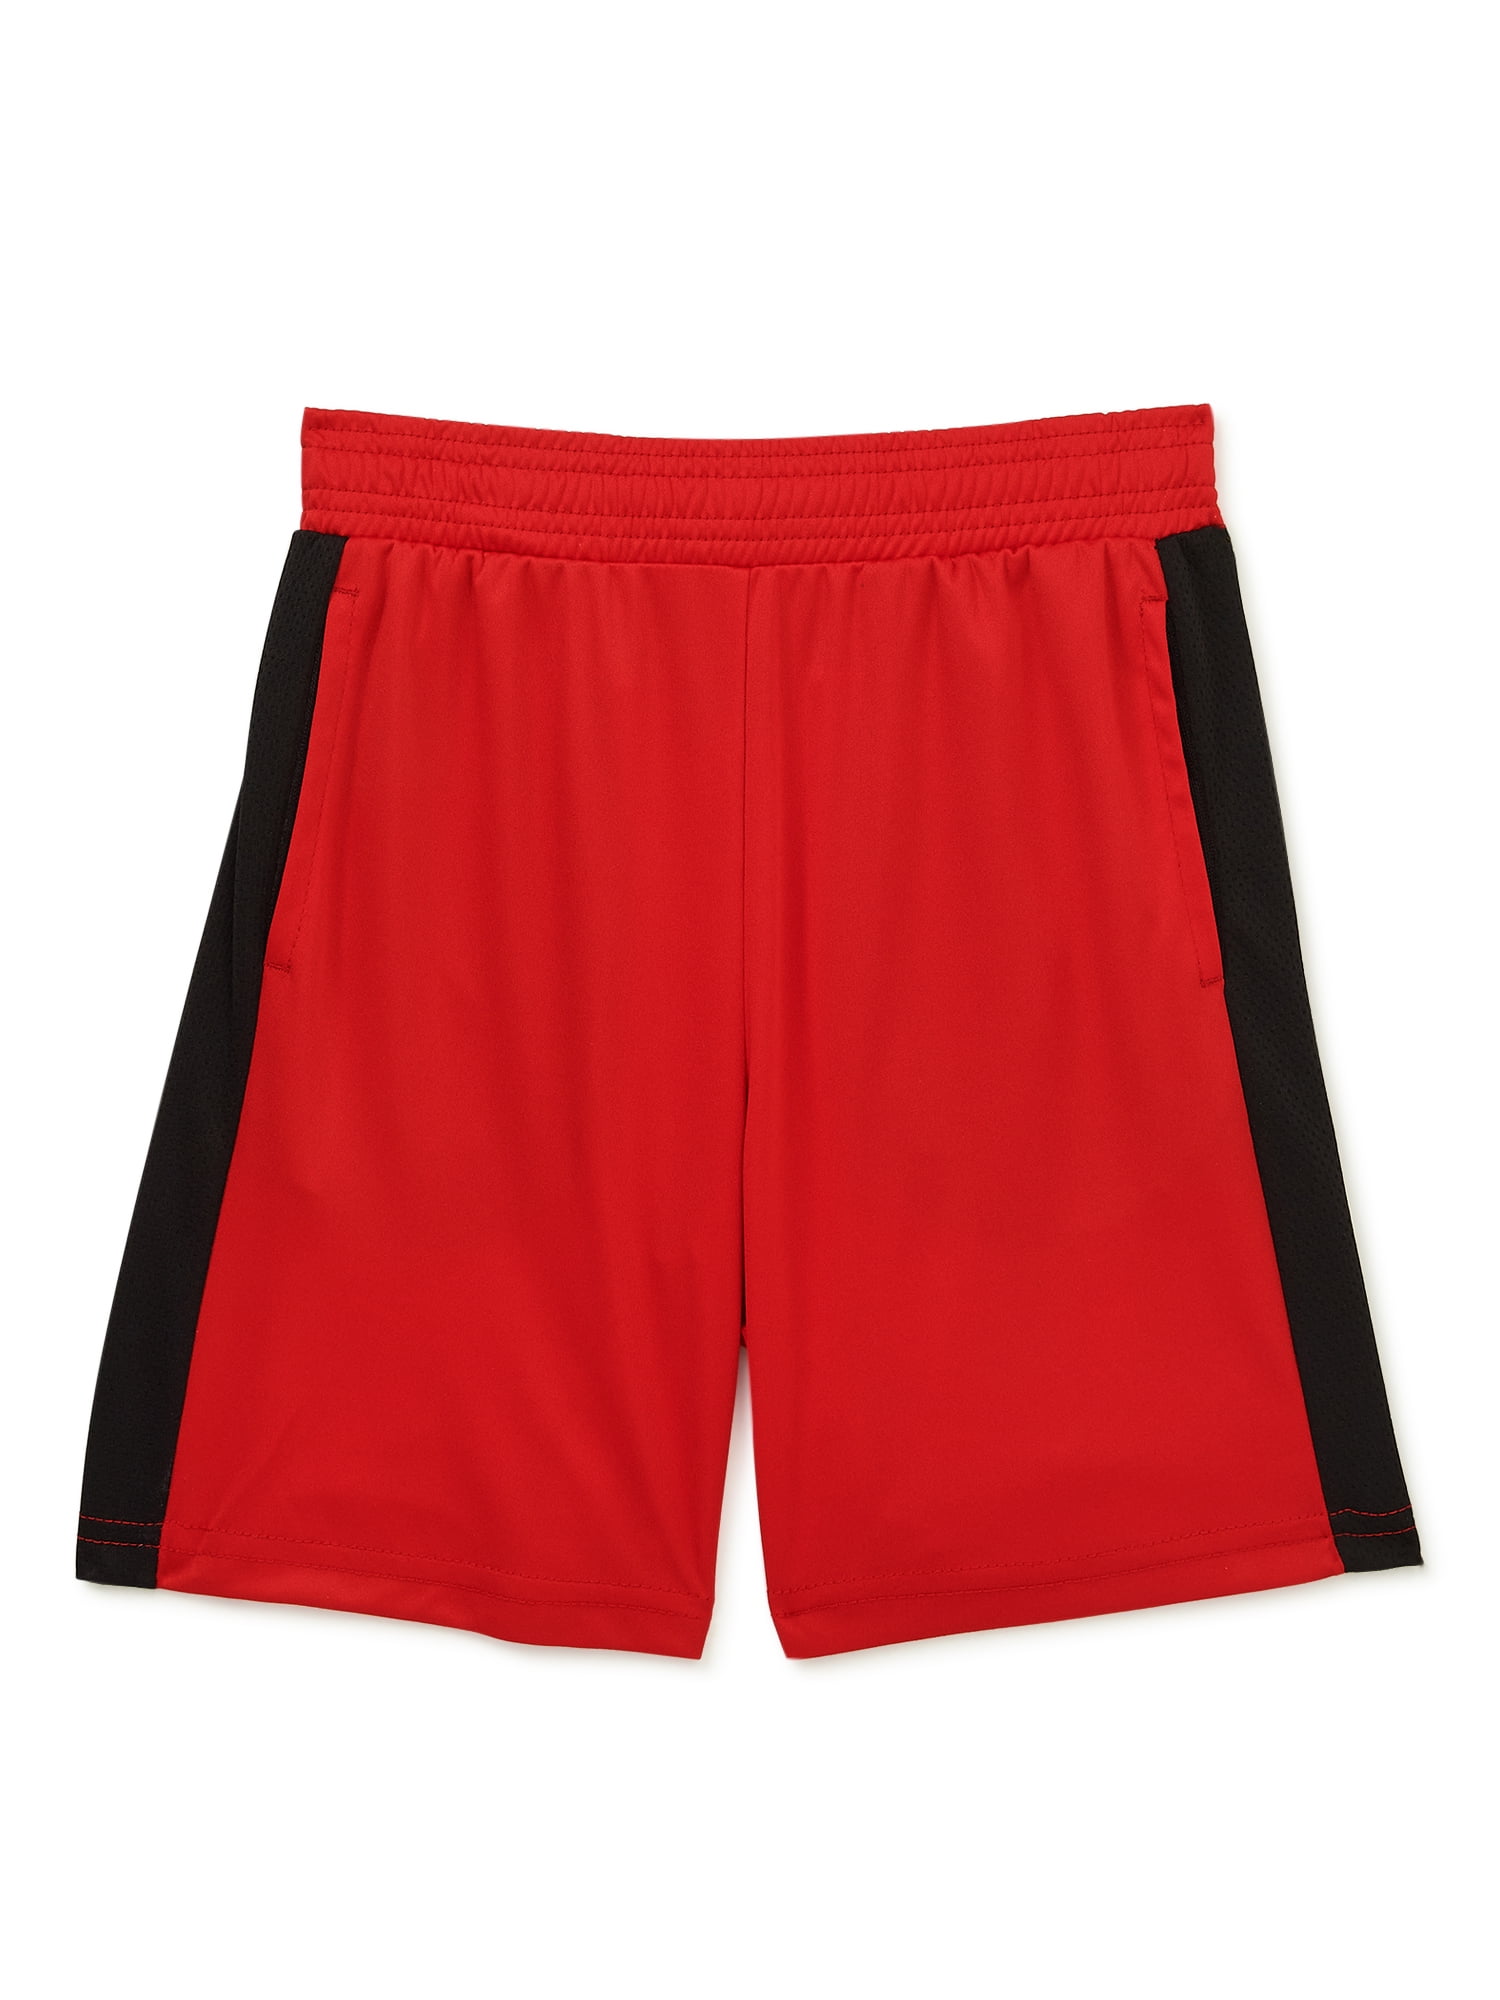 Athletic Works Boys Soccer Shorts, 3-Pack, Sizes 4-18 & Husky 